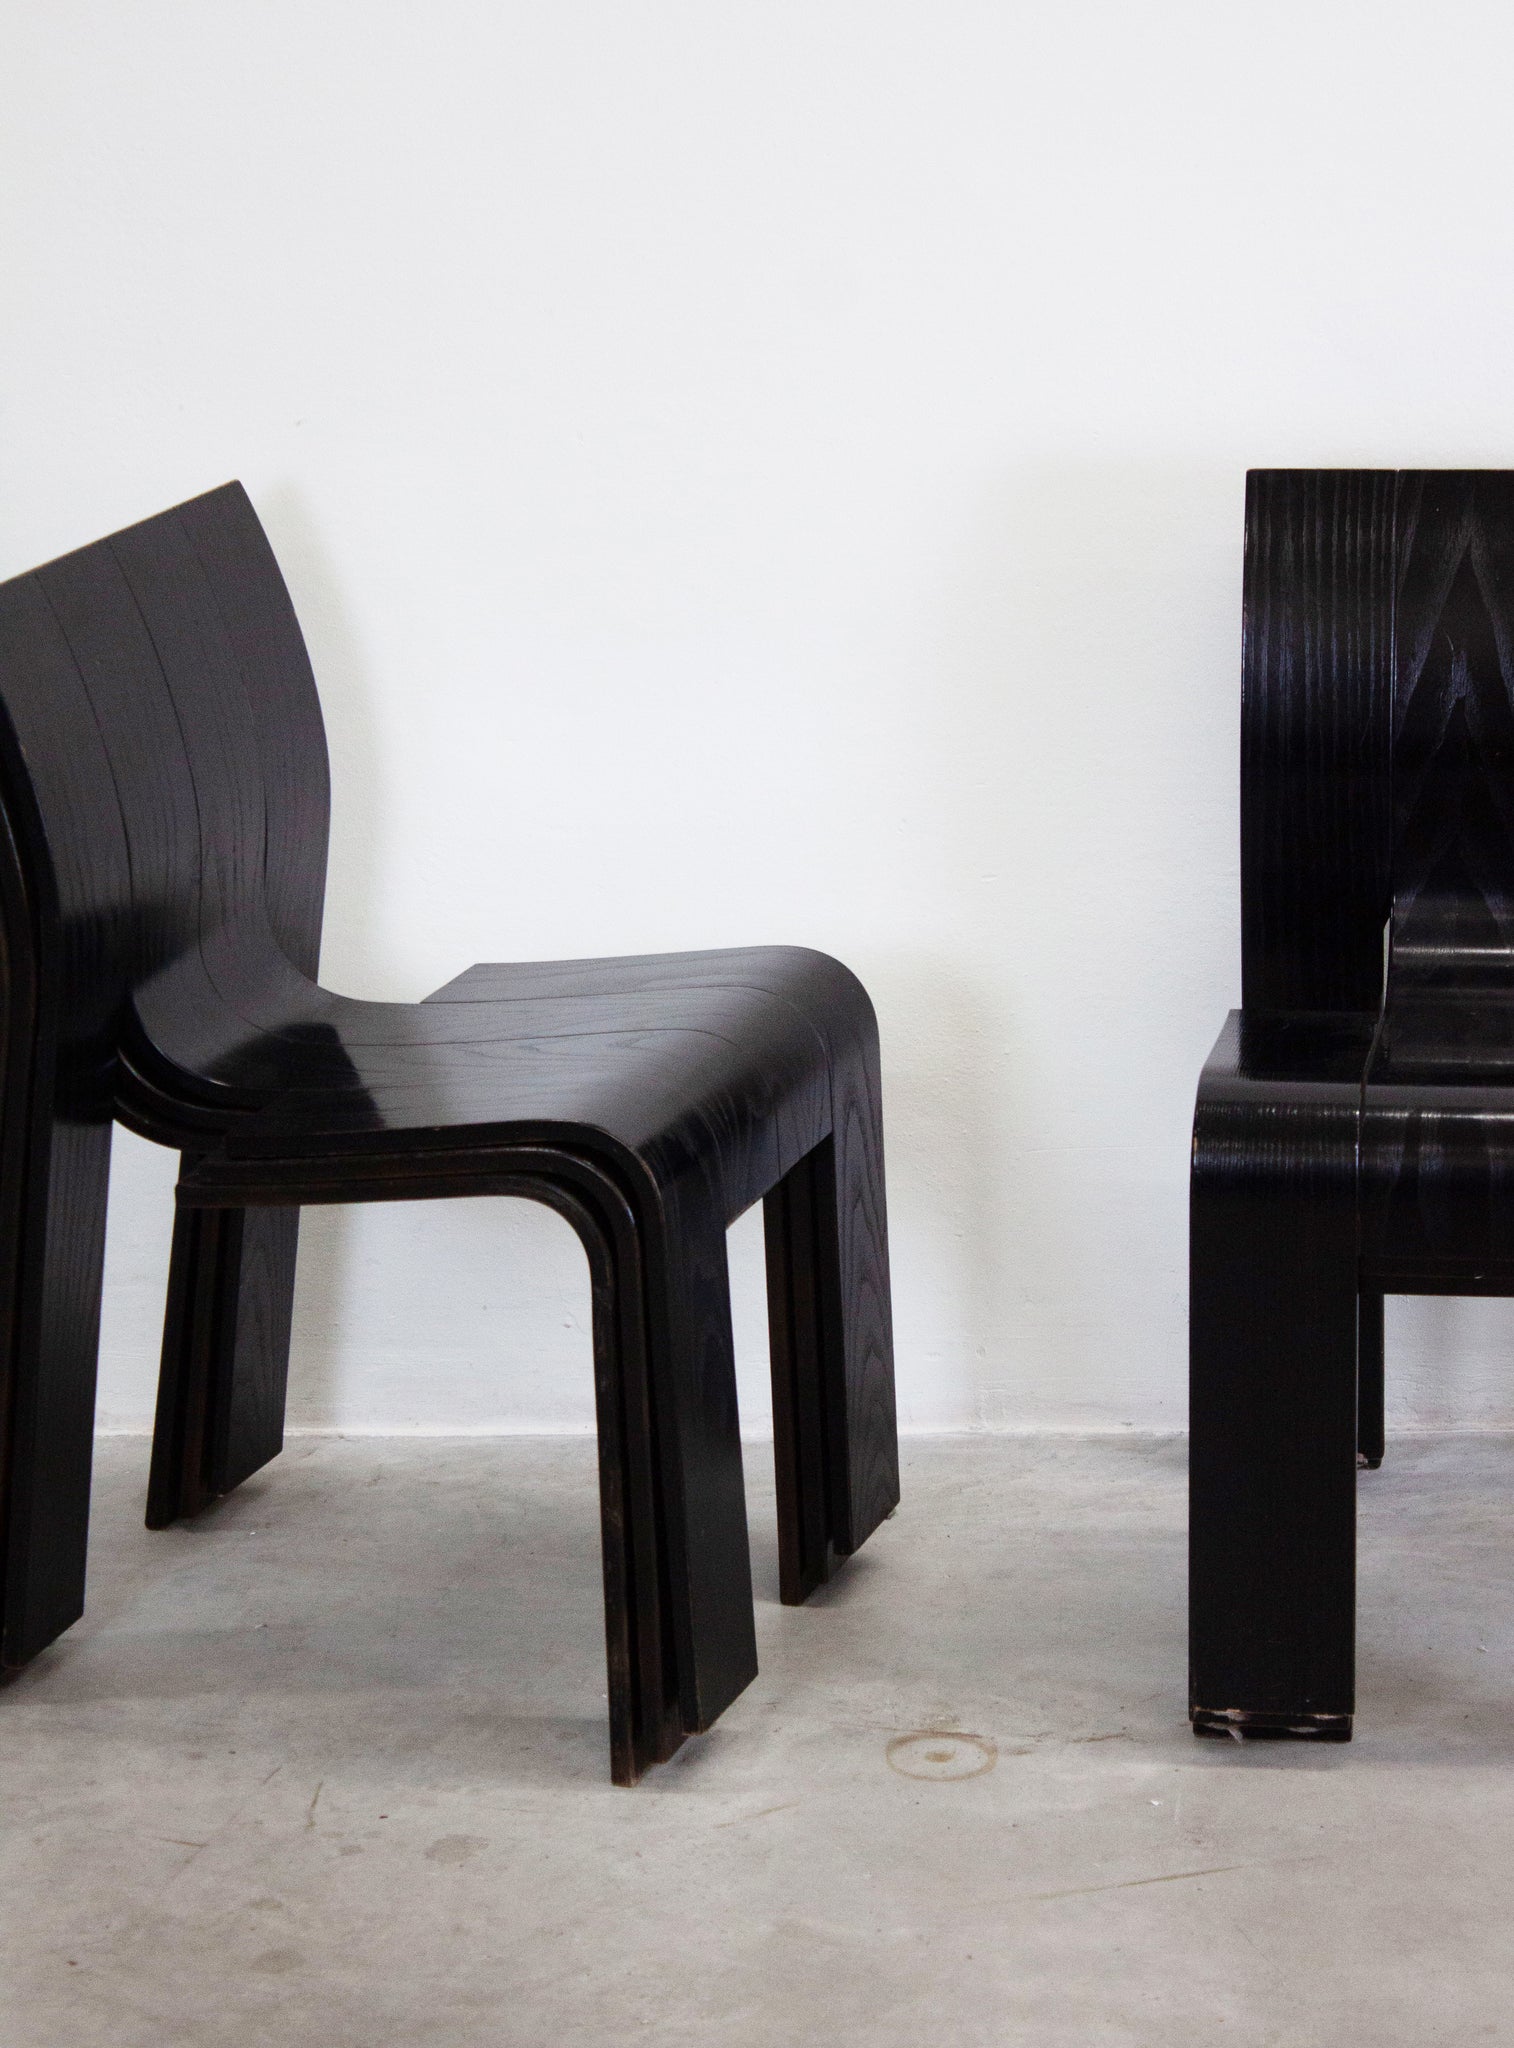 Castelijn Strip Chairs by Gijs Bakker (Black)